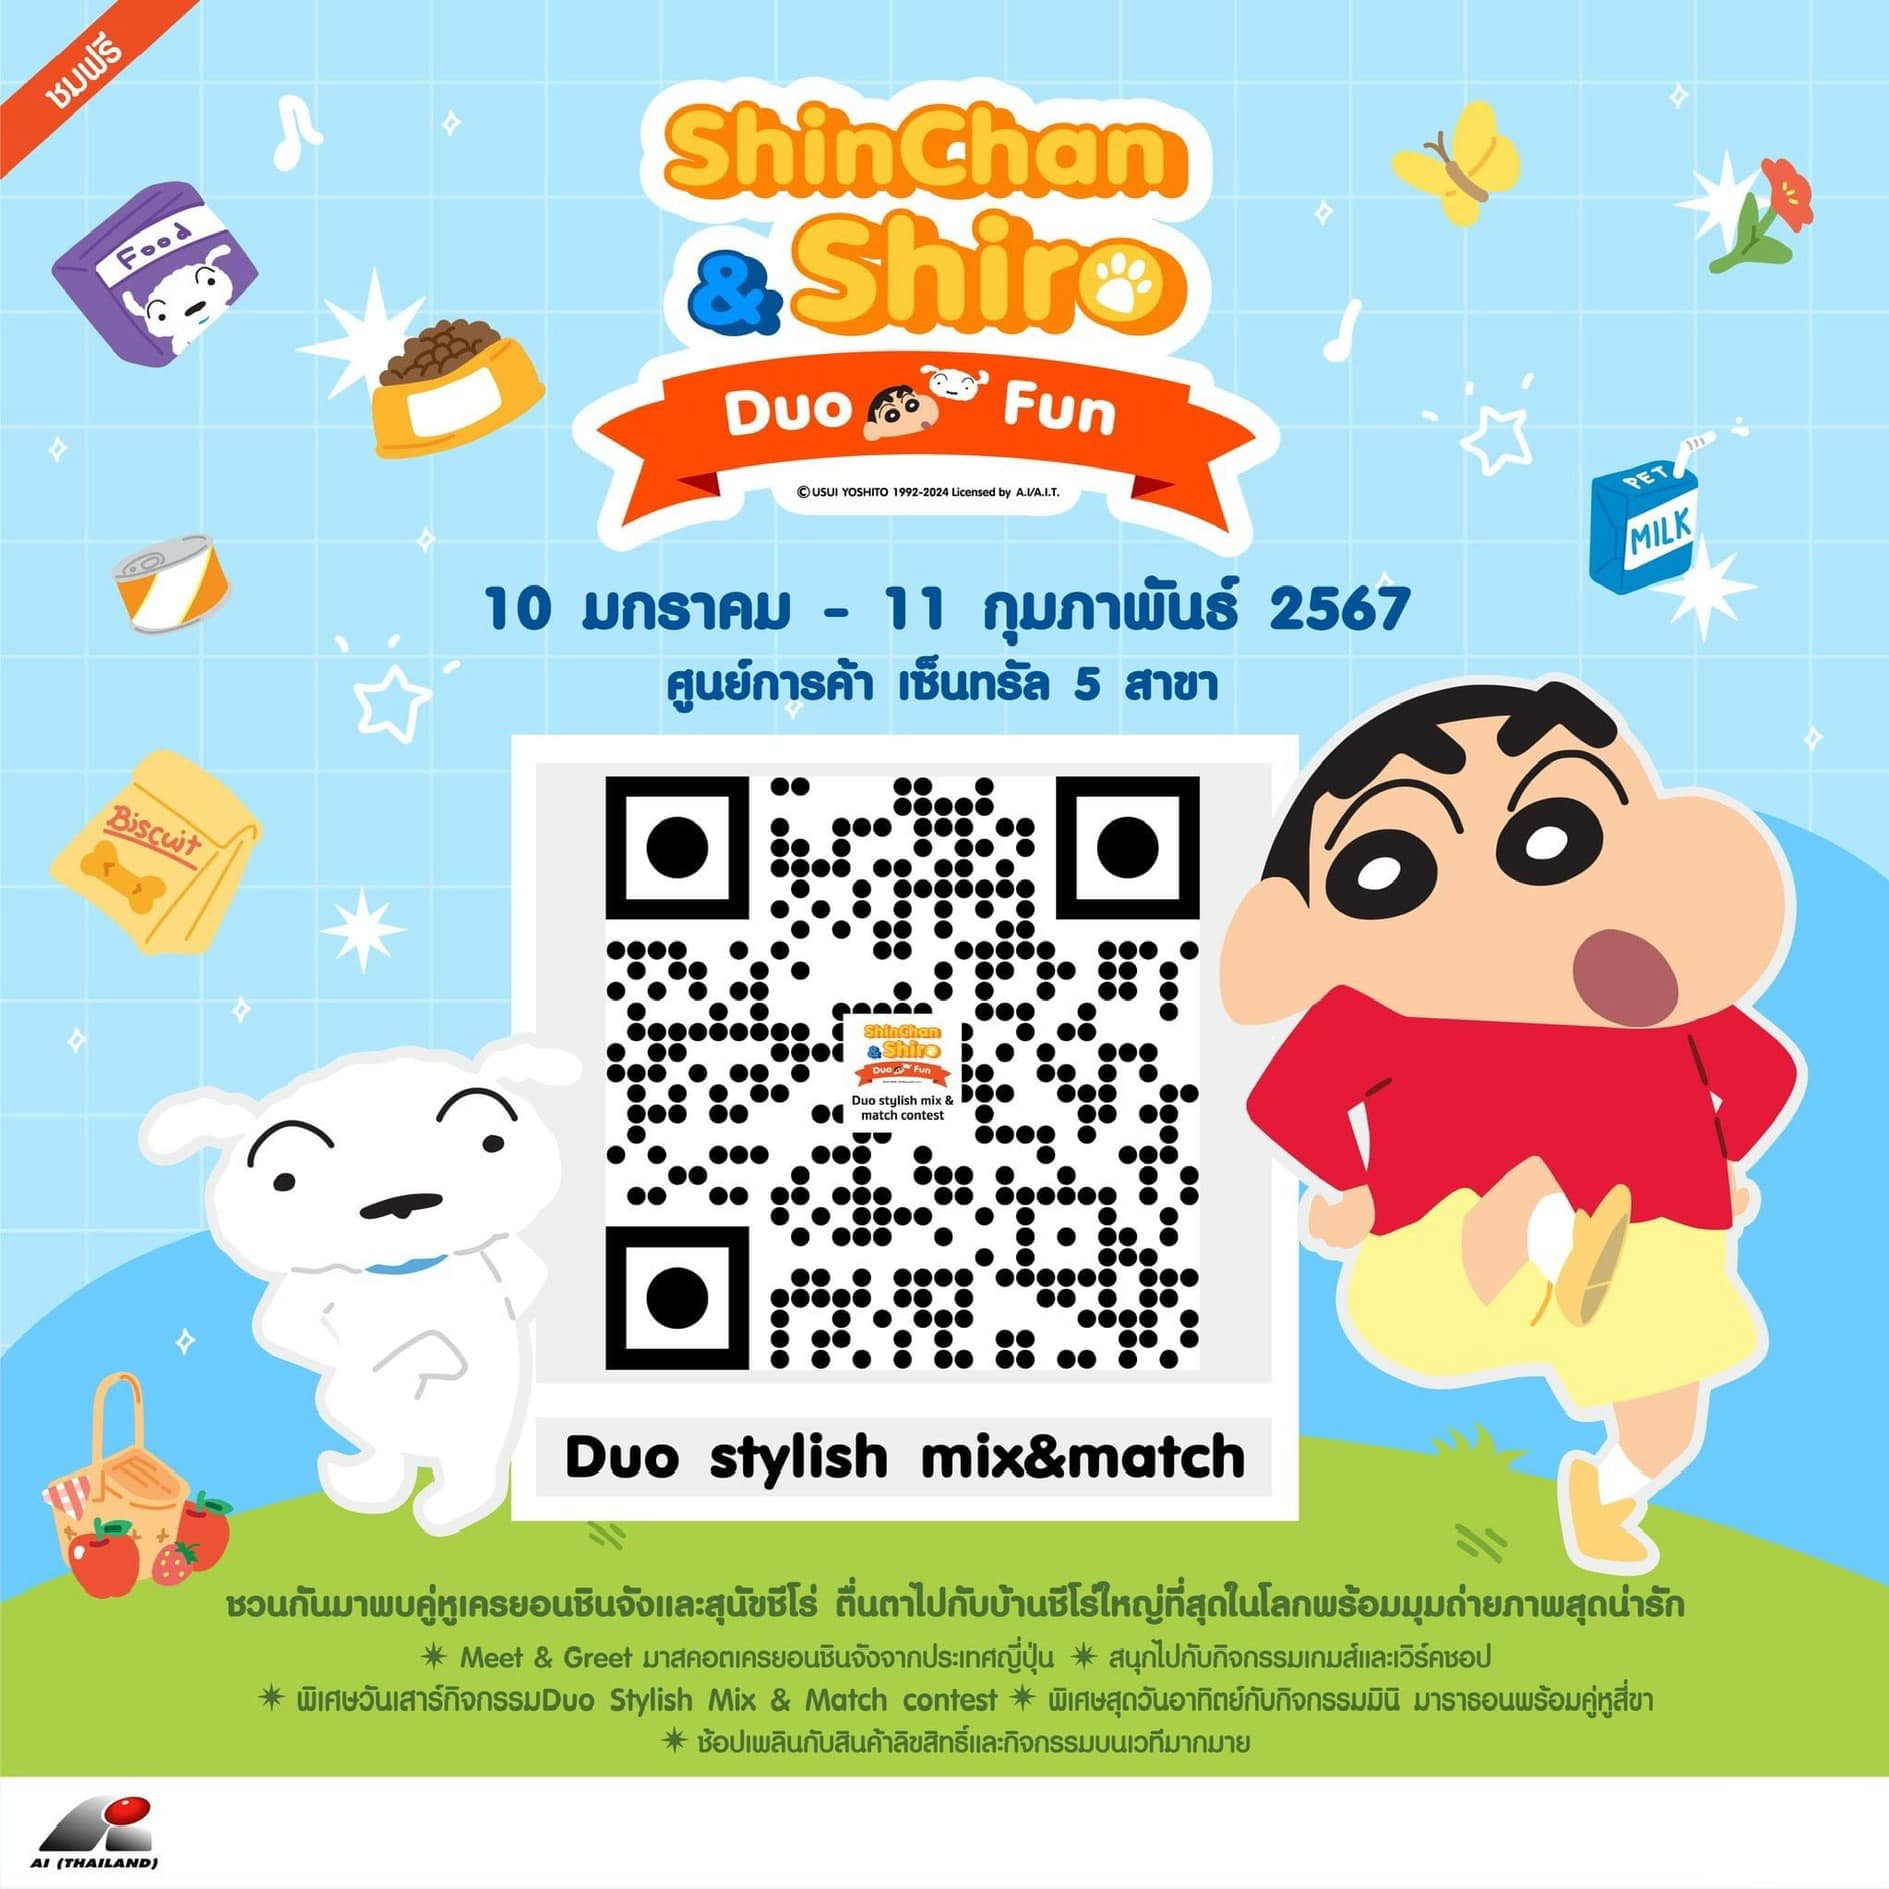 Dogilike.com :: Shin Chan & Shiro Duo Fun �ء�ٹ���ä���繷��� 5 �Ң�!